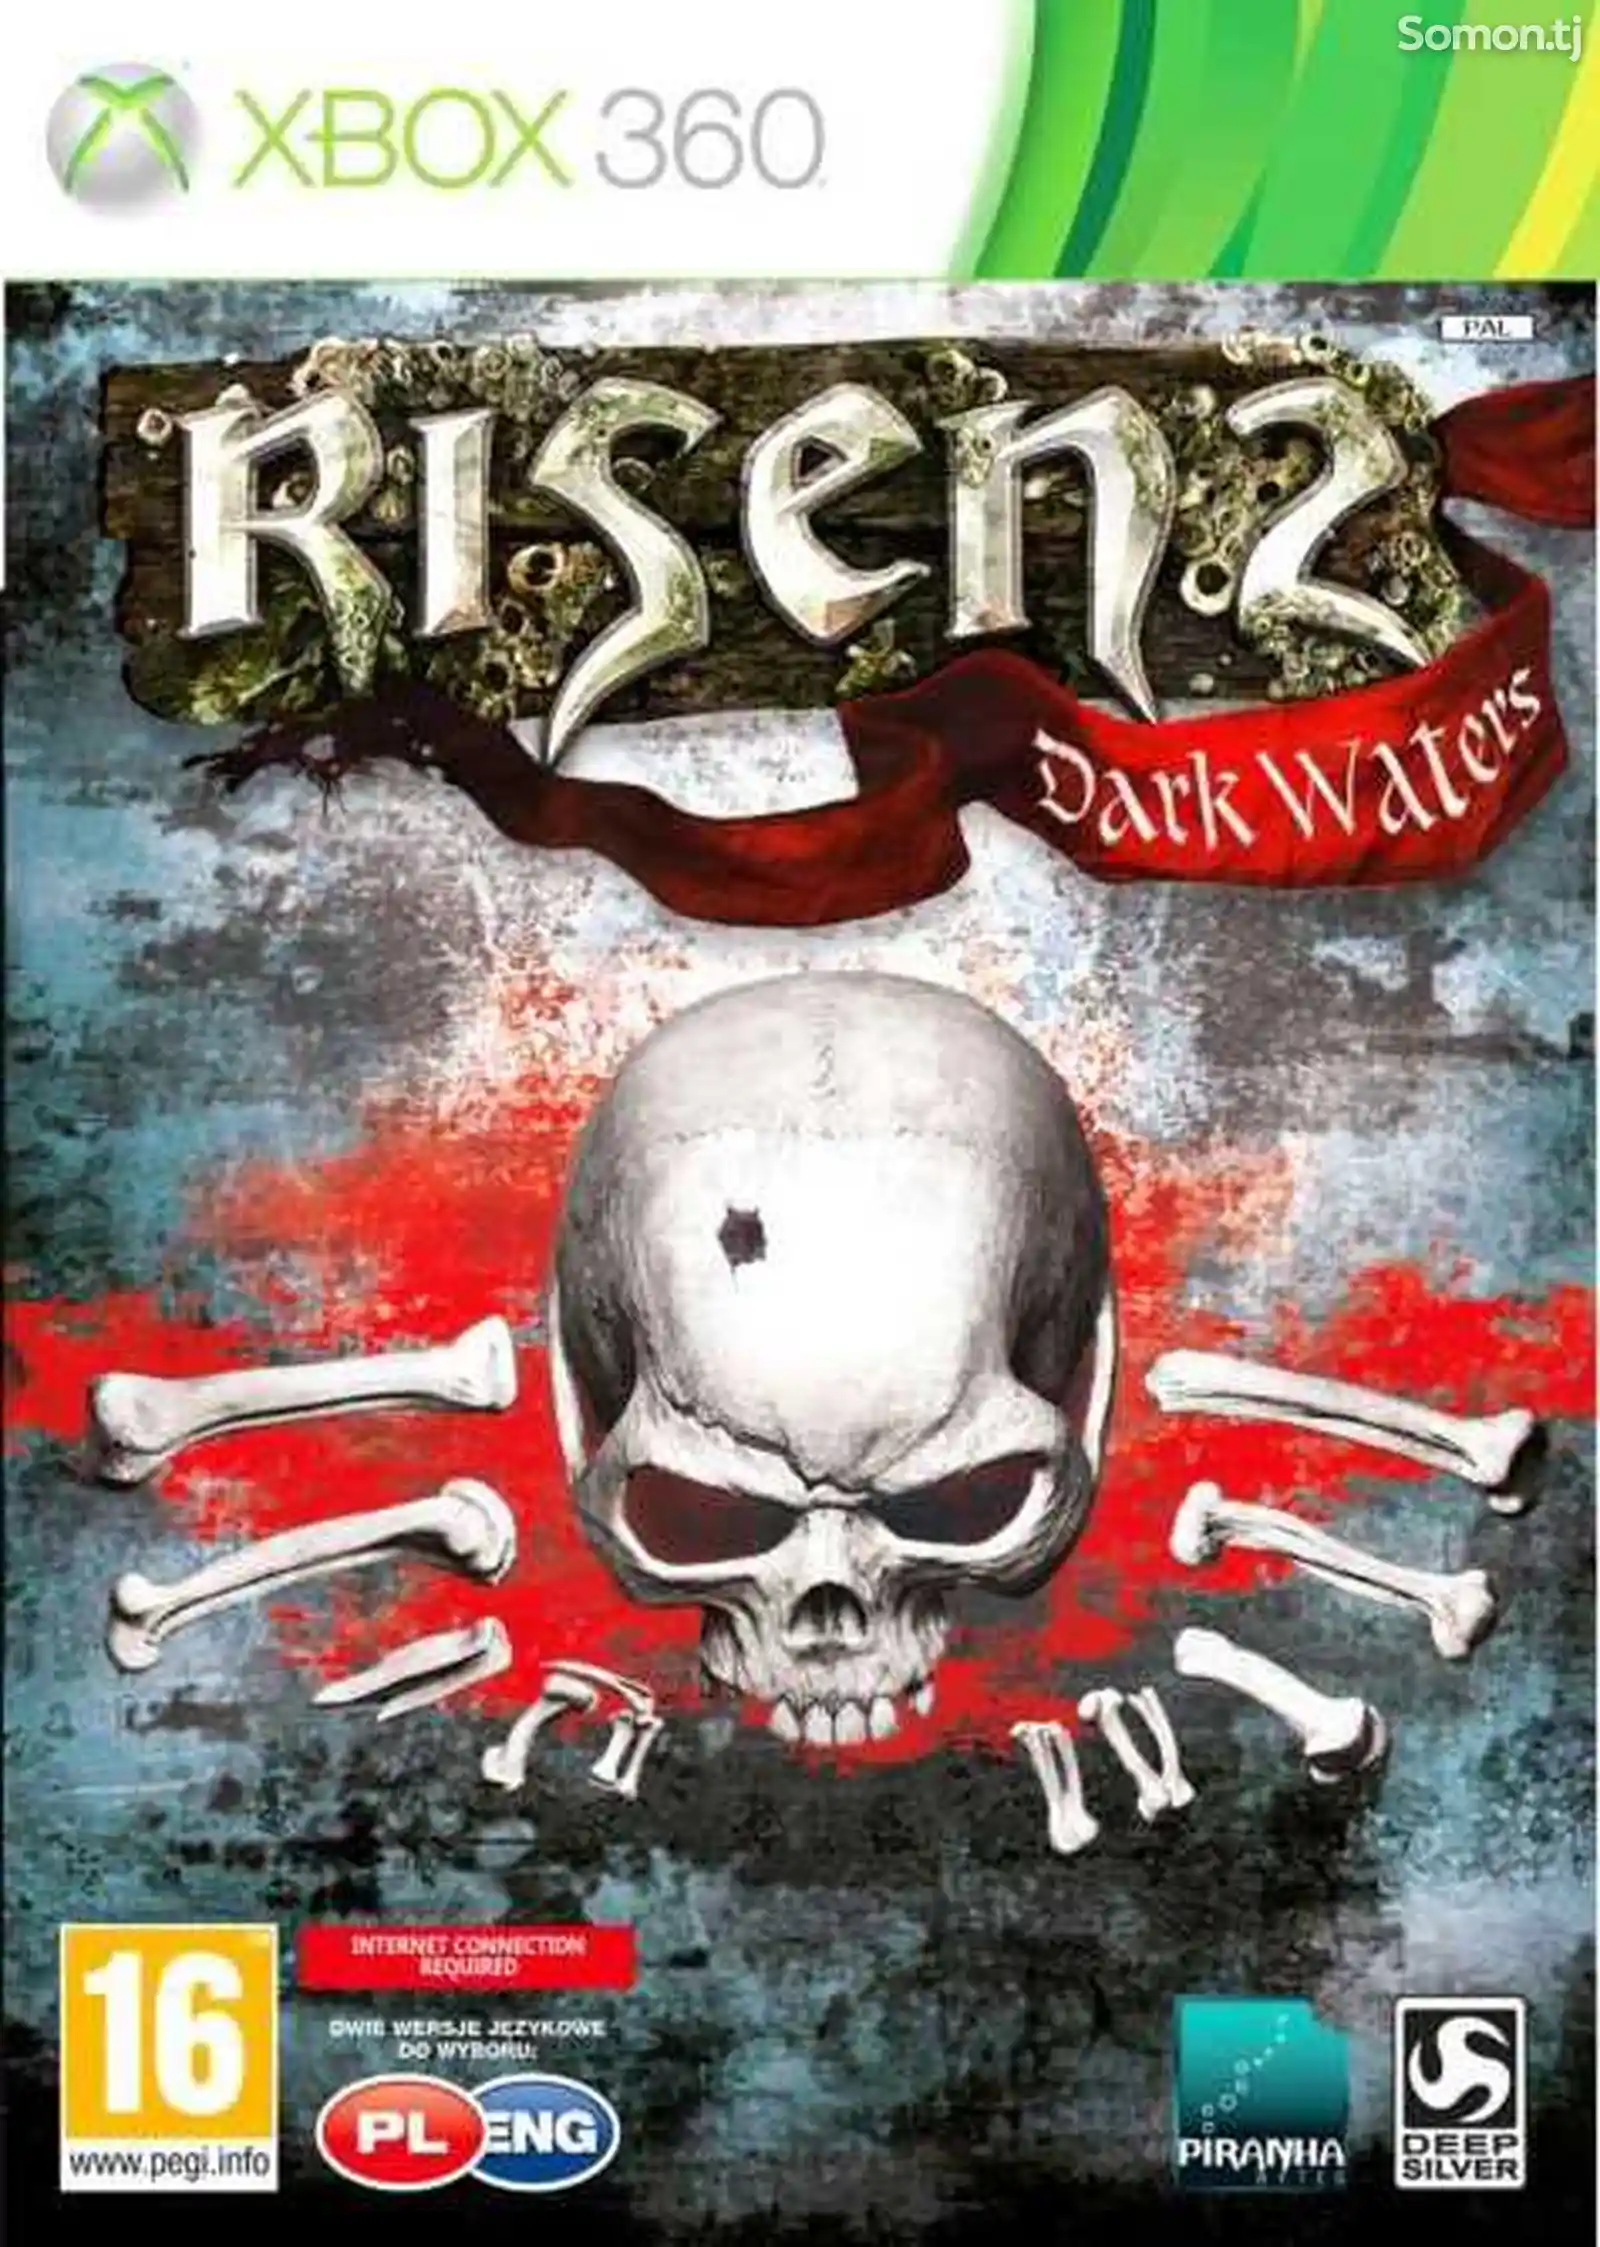 Игра Risen 2 dark waters special edition для прошитых Xbox 360